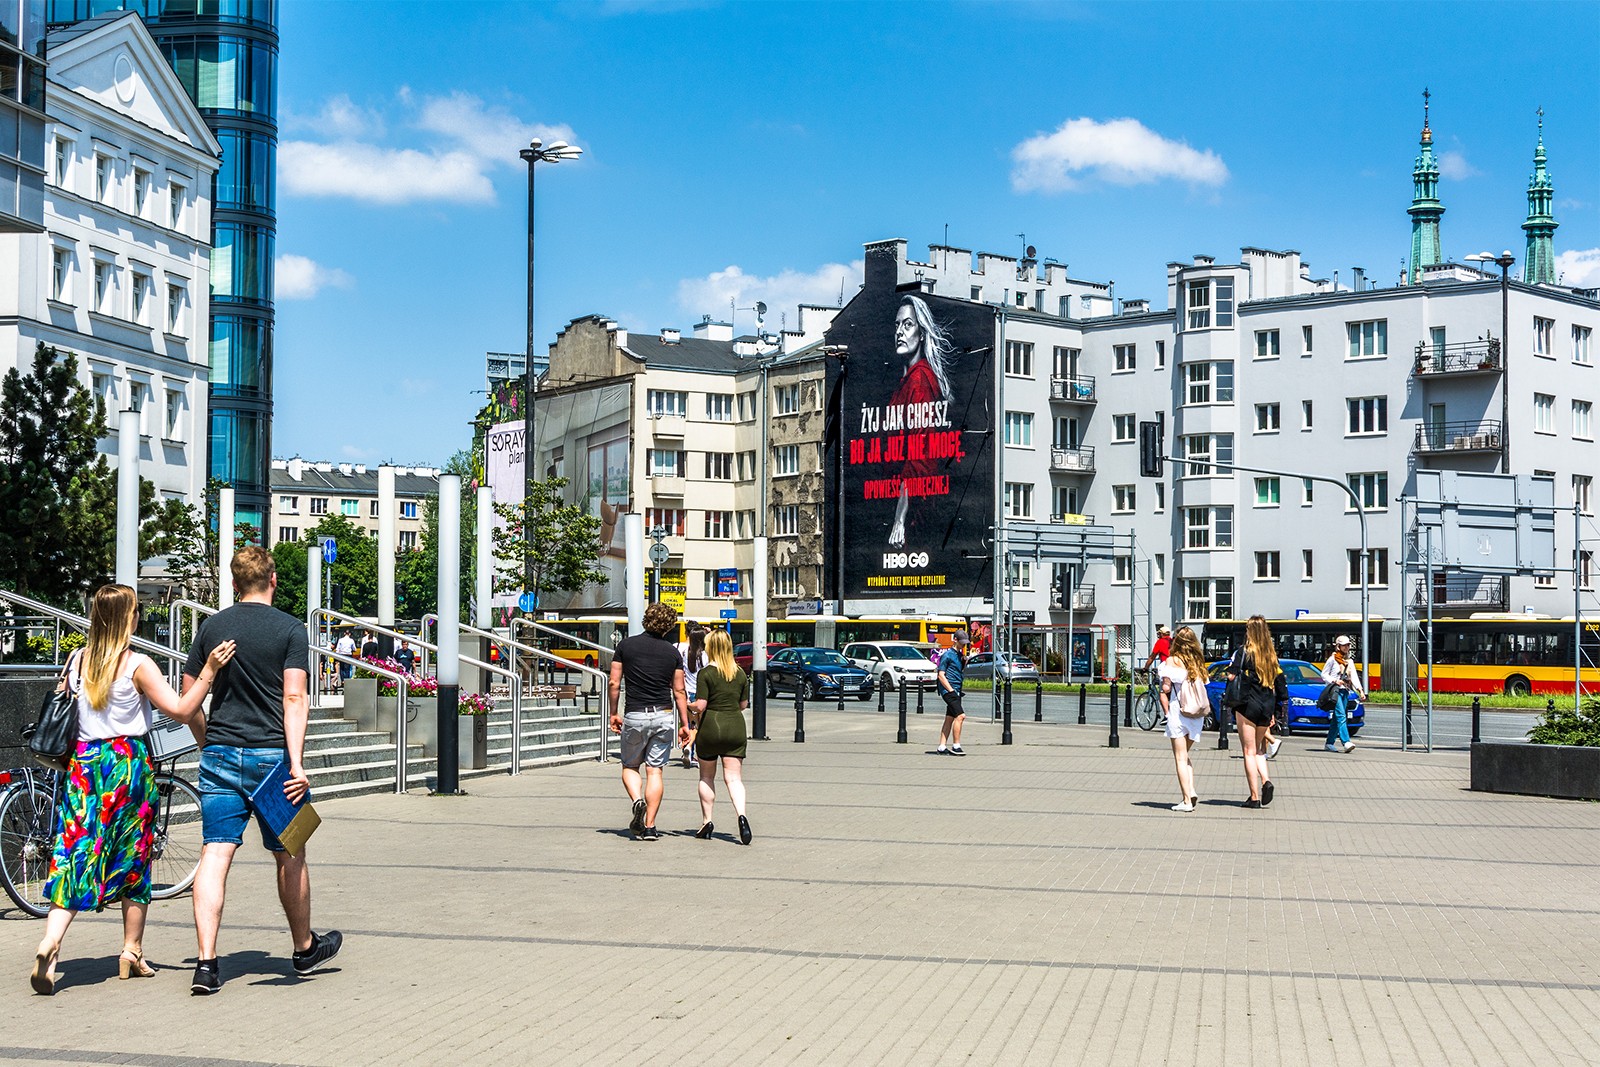 Advertising mural HBO GO The Handmaid's Tale Jaworzyńska 9 street in Warsaw | The Handmaid's Tale | Portfolio